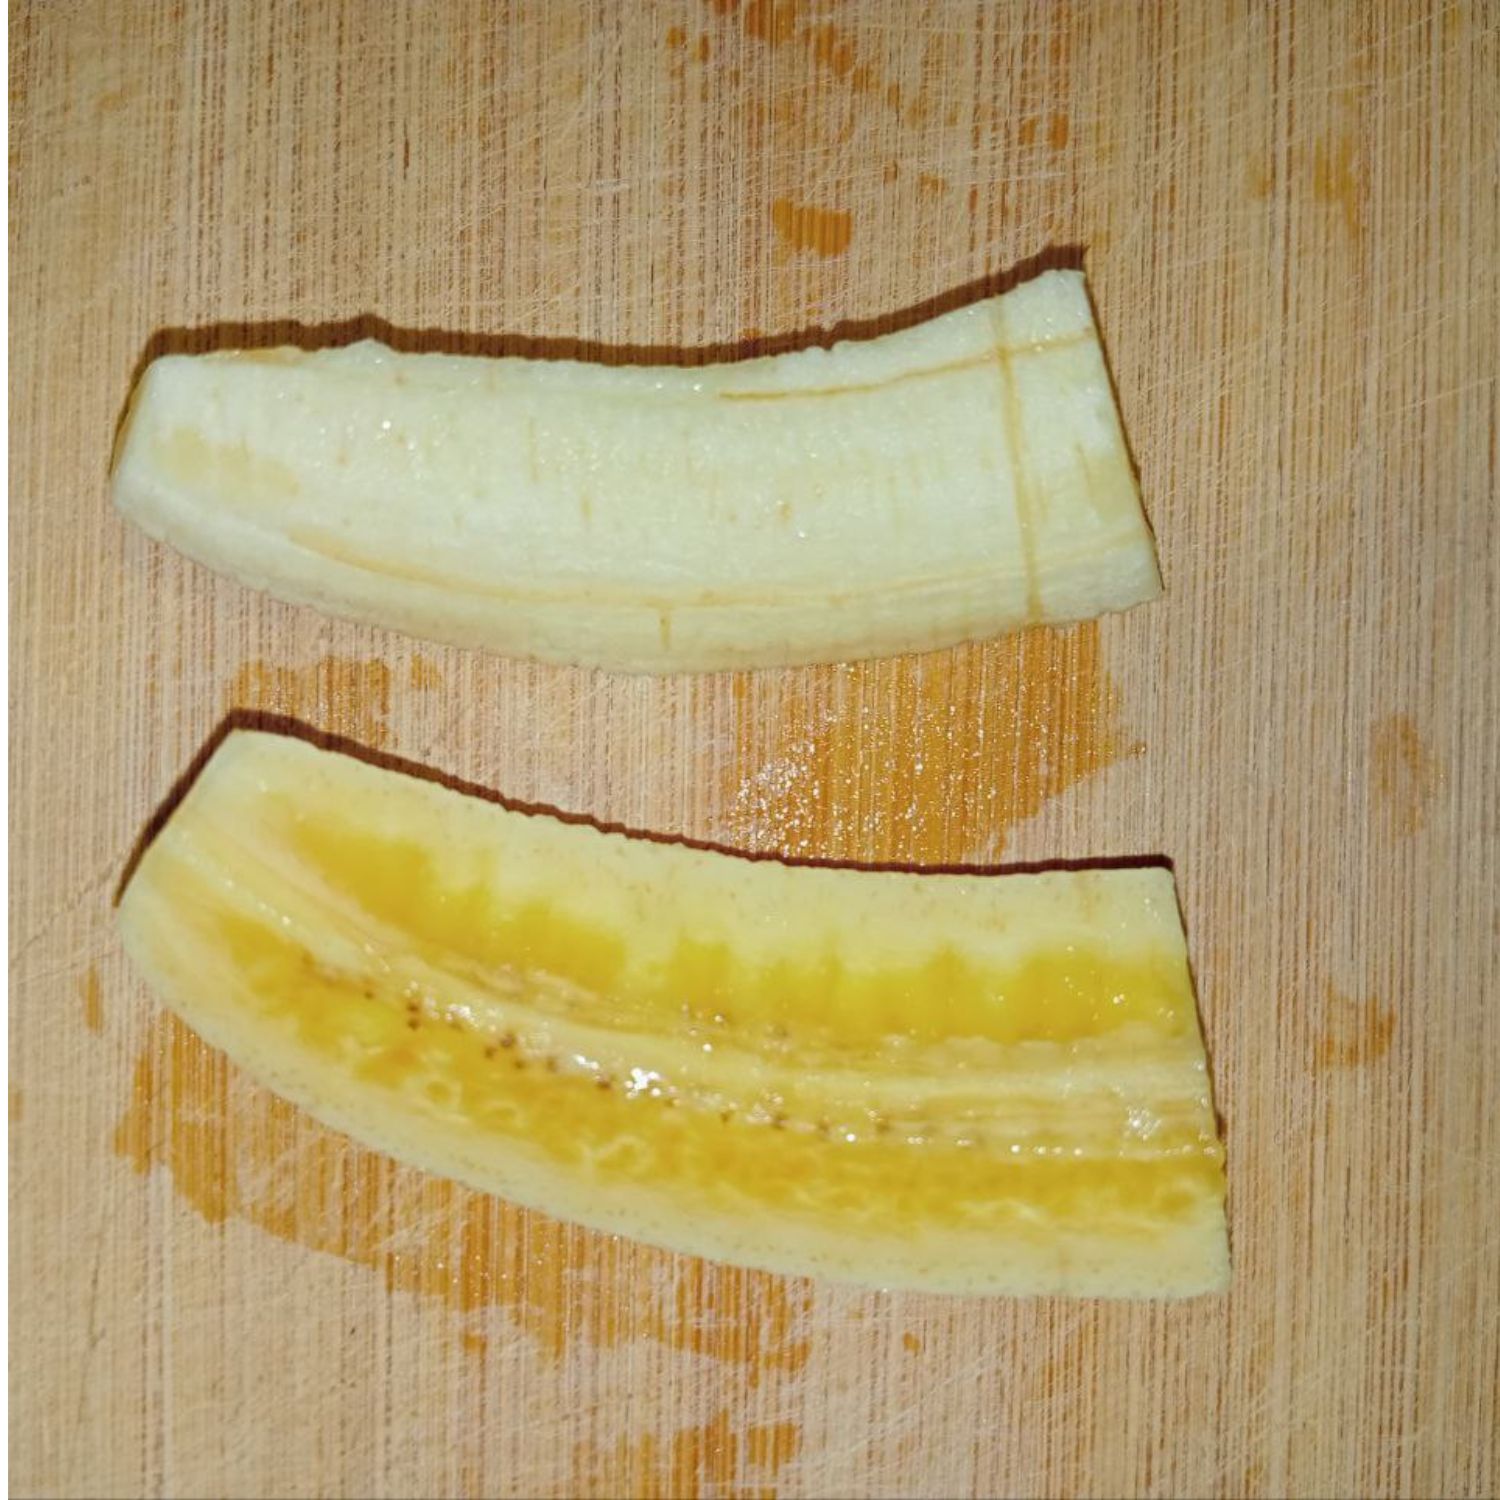 Banana half peel